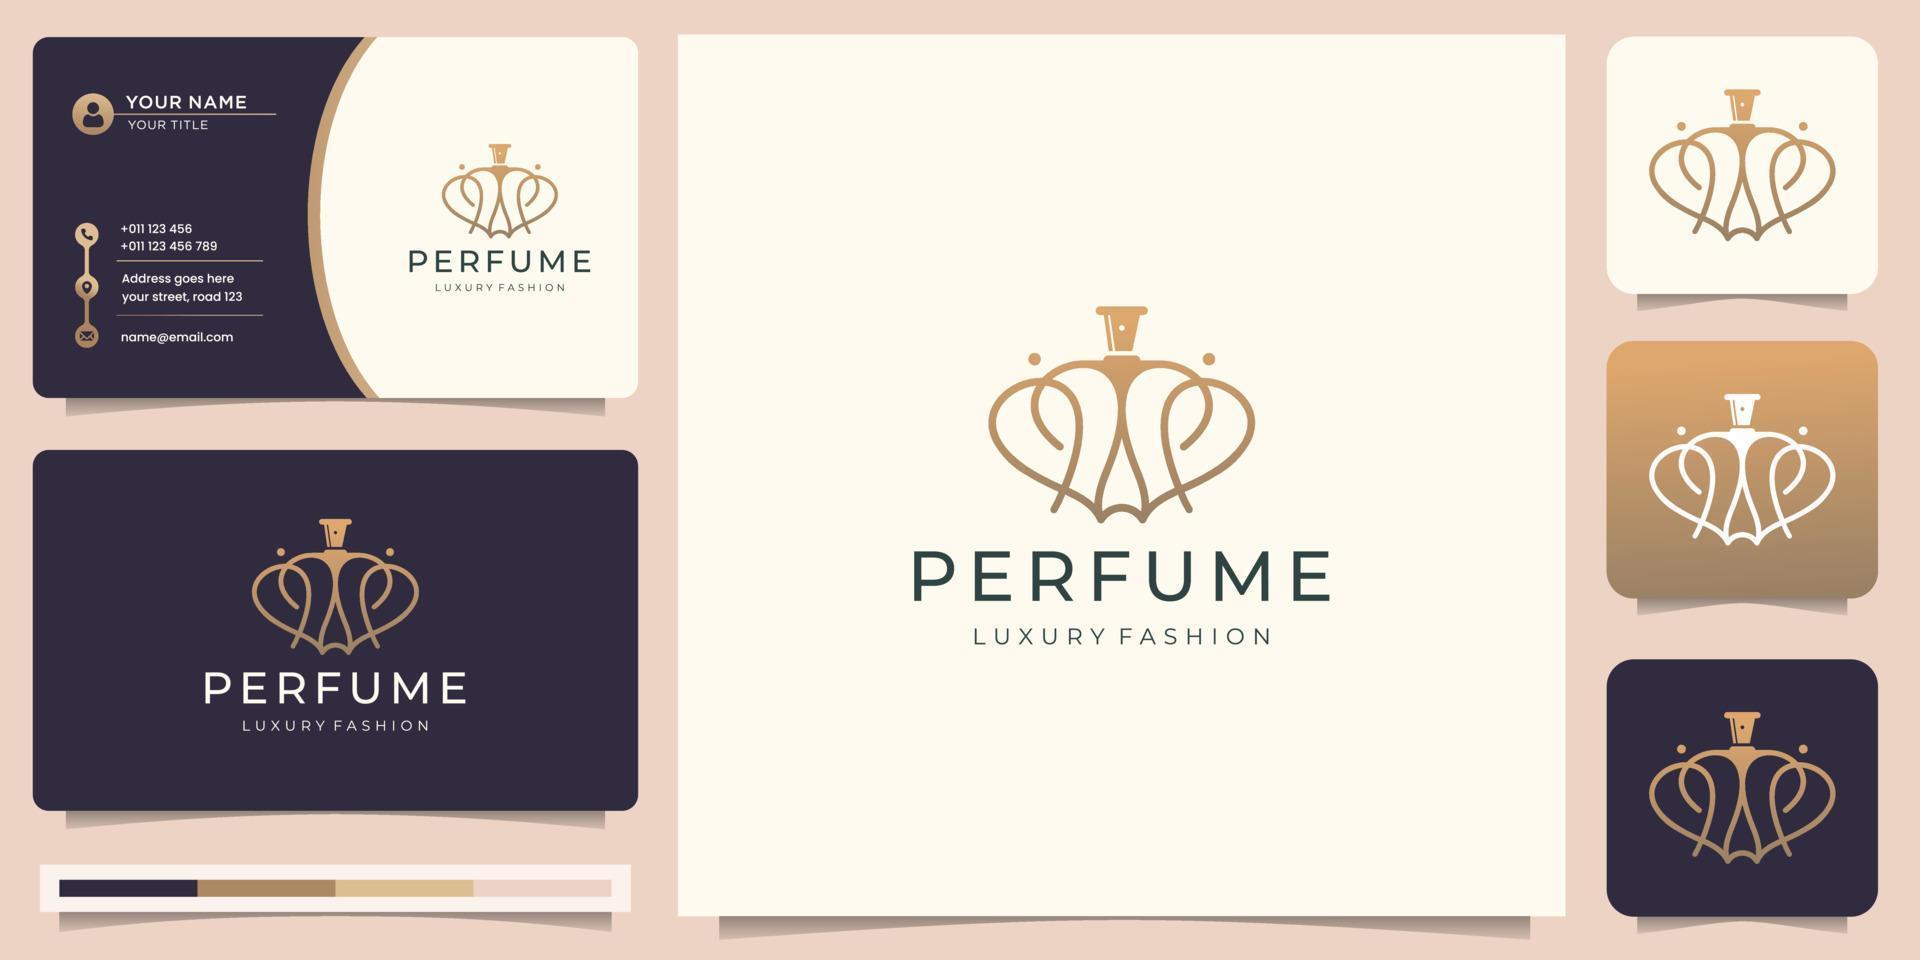 minimalist perfume bottles logo design template. creative bottle perfume,luxury fashion,inspiration. vector